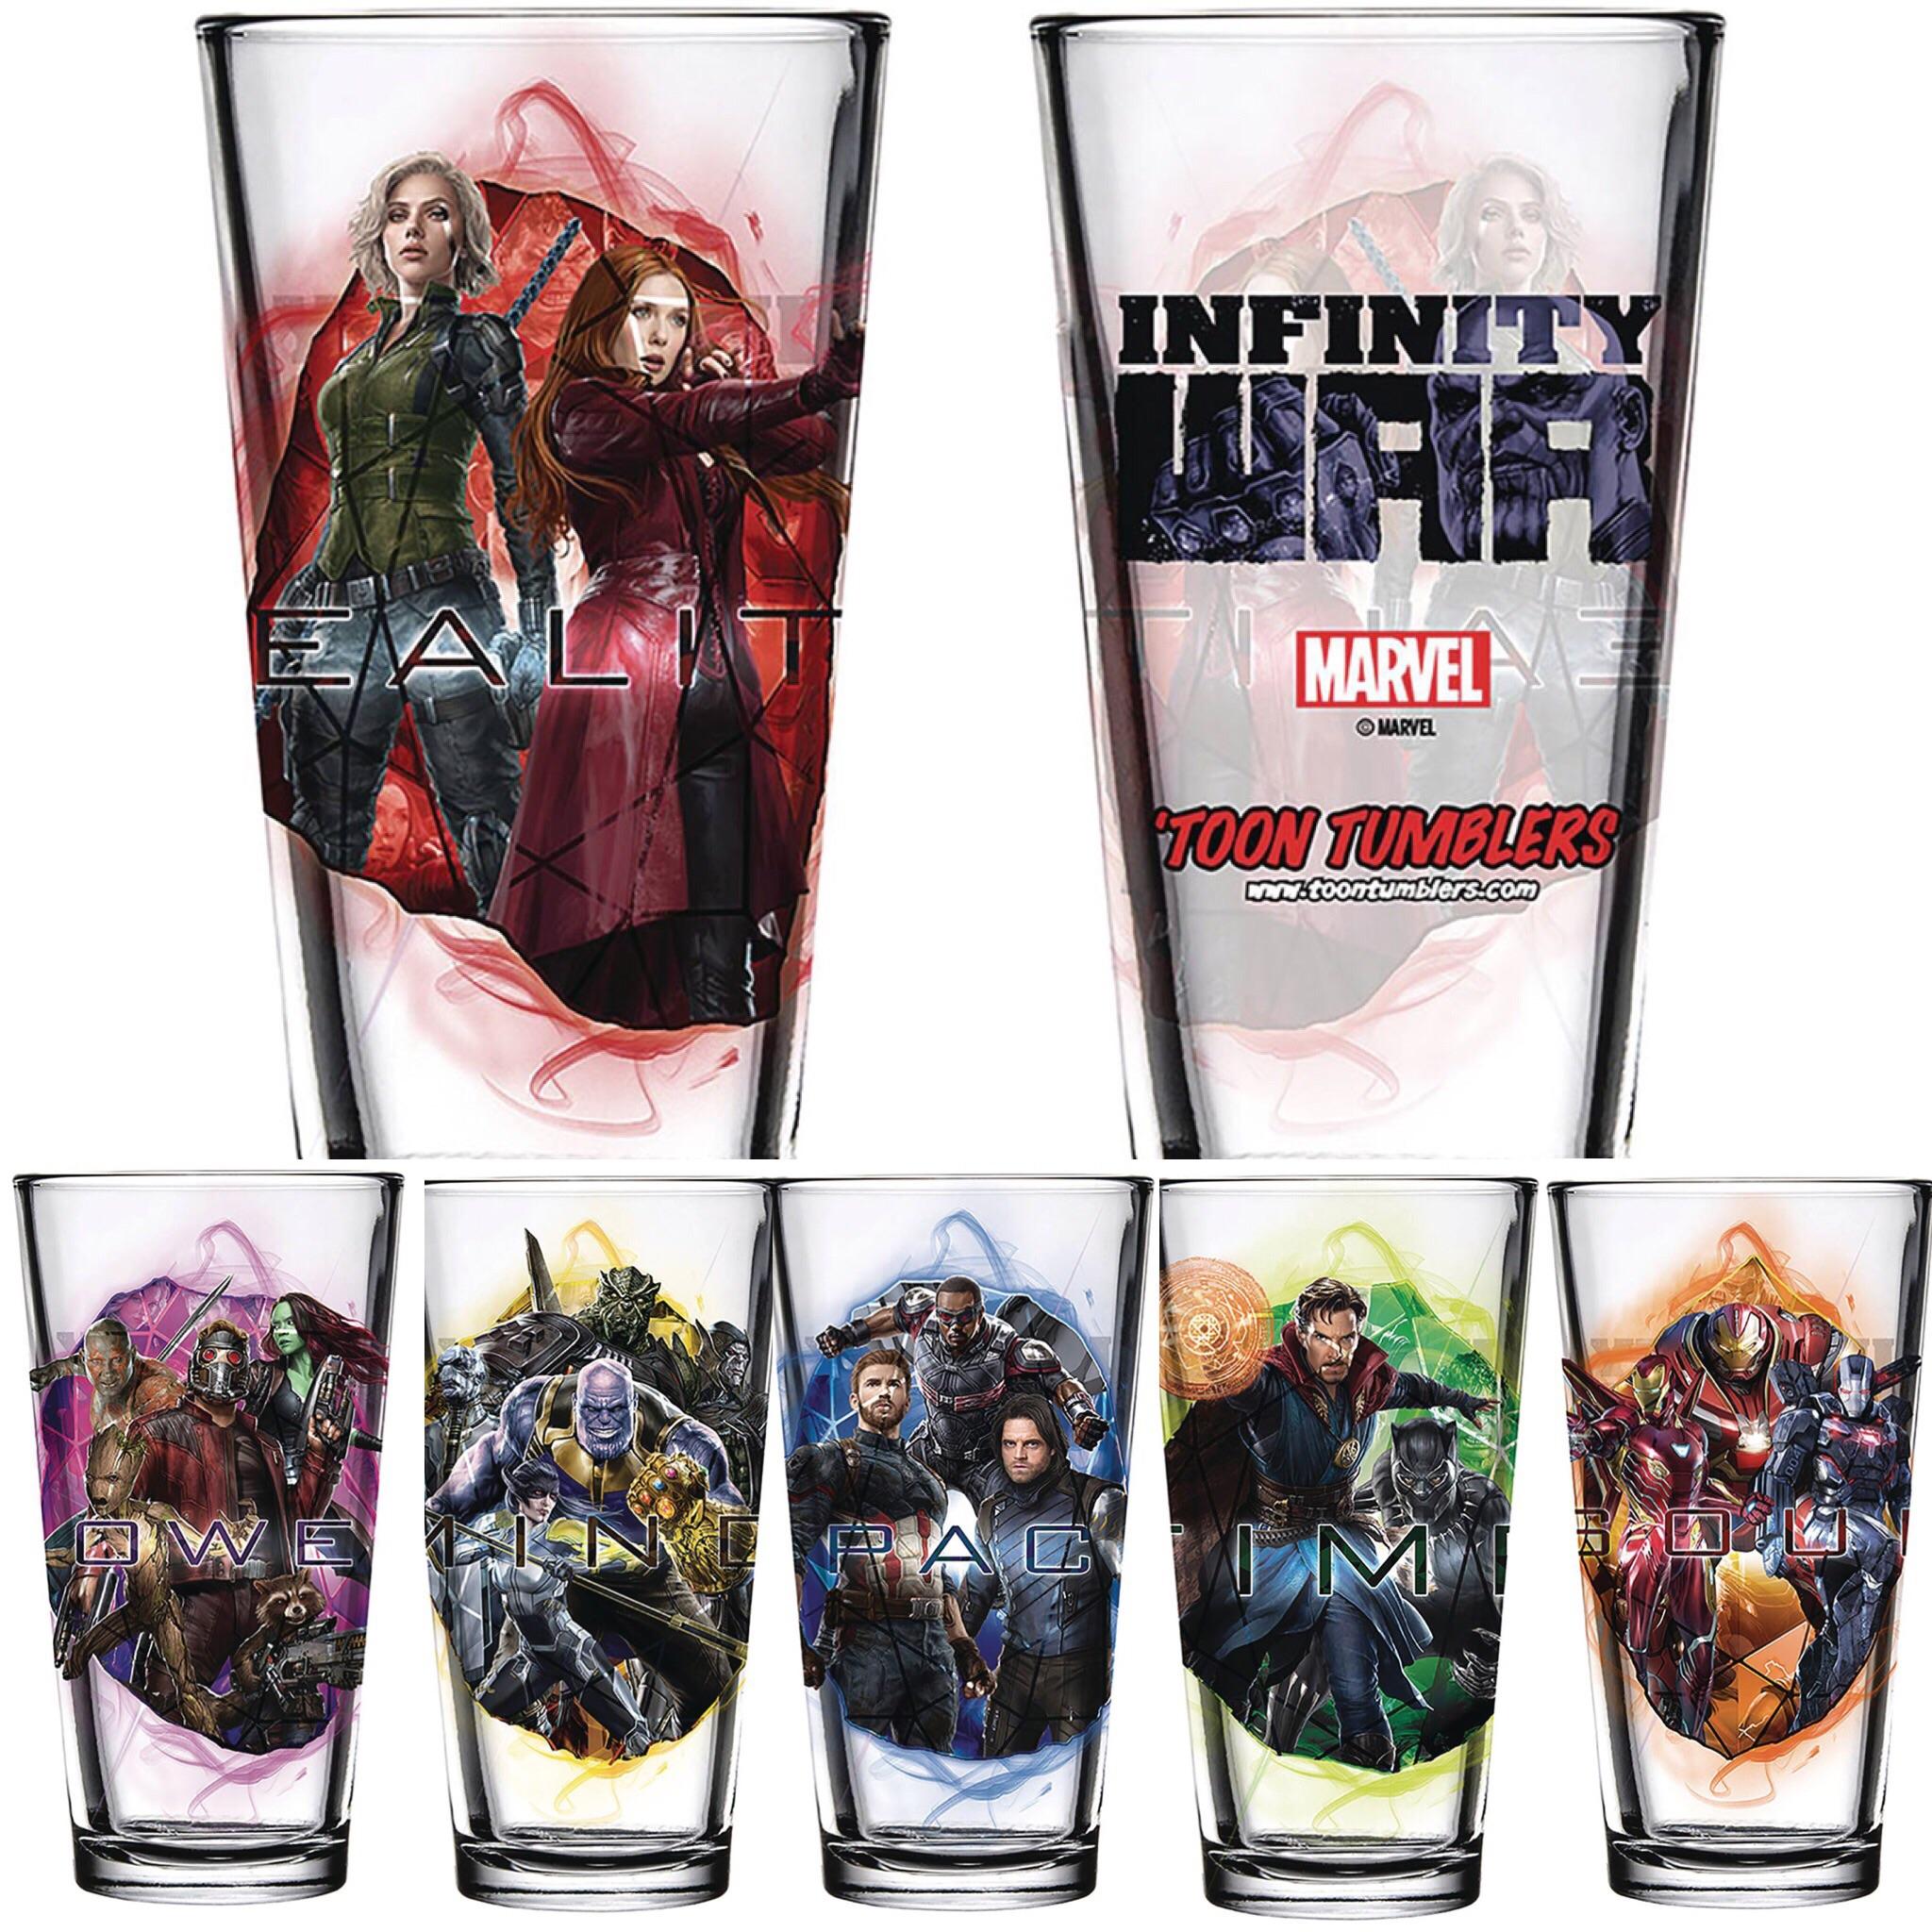 The Avengers: Infinity War Pint Glasses